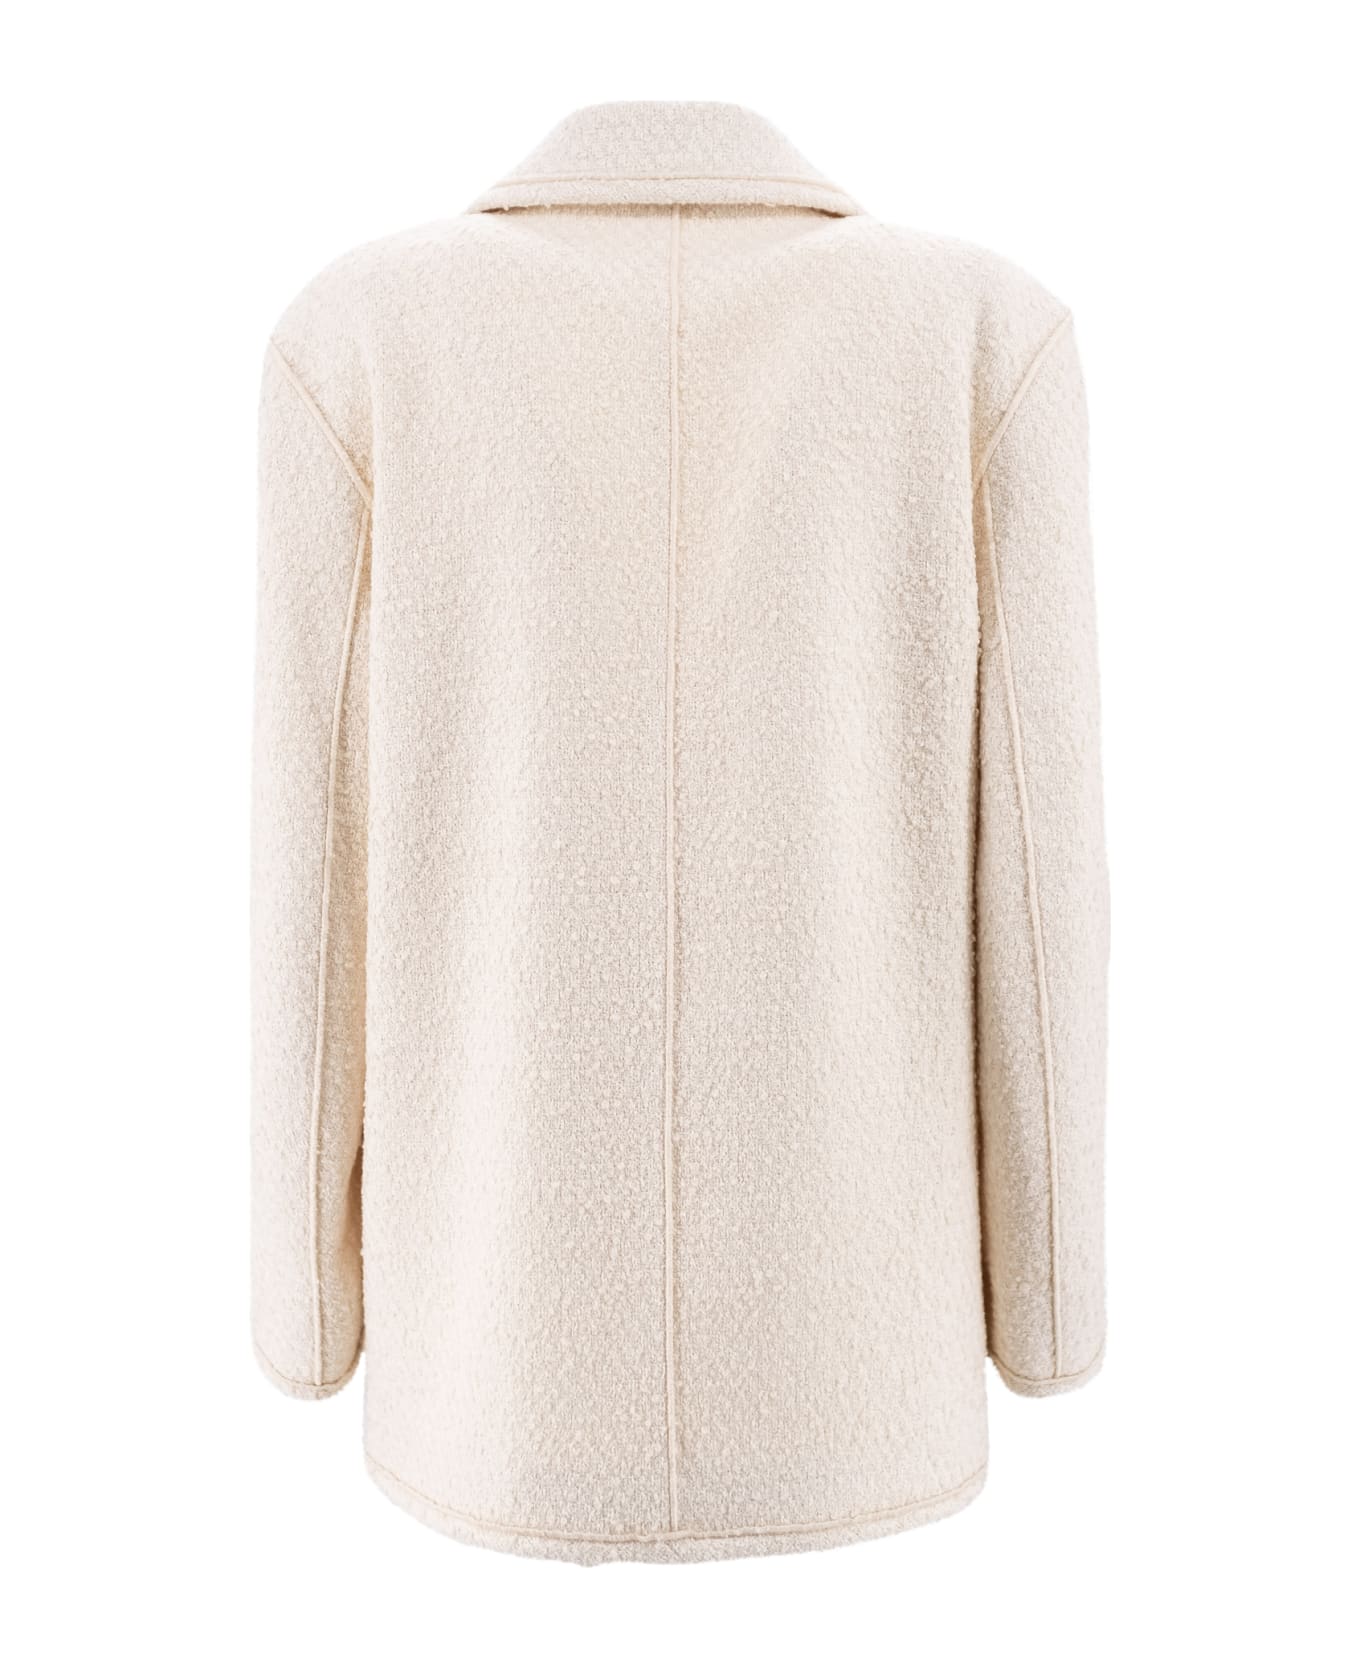 Philosophy di Lorenzo Serafini Button-up Tweed Shirt Jacket - Ivory コート